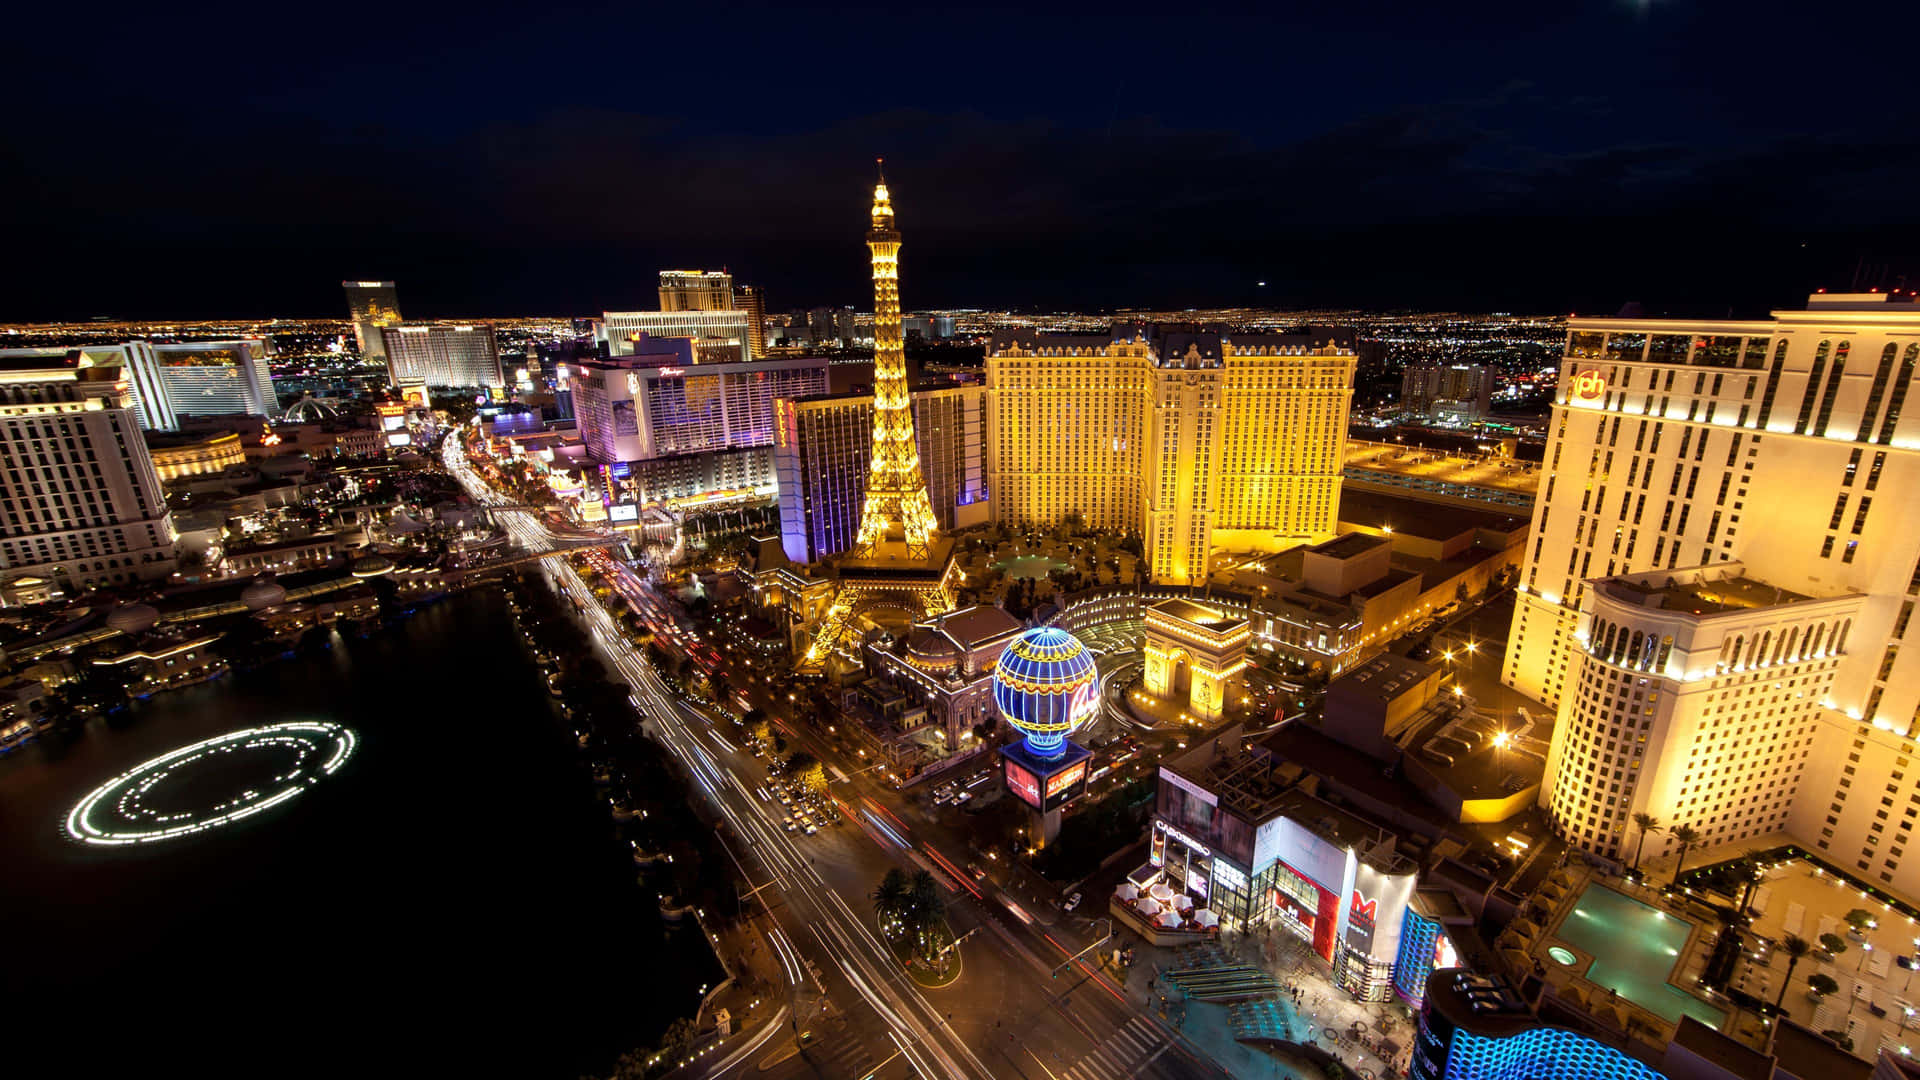 Related Keywords: Las Vegas Strip, night sky, lights, high-resolution, vibrant, cityscape, buildings